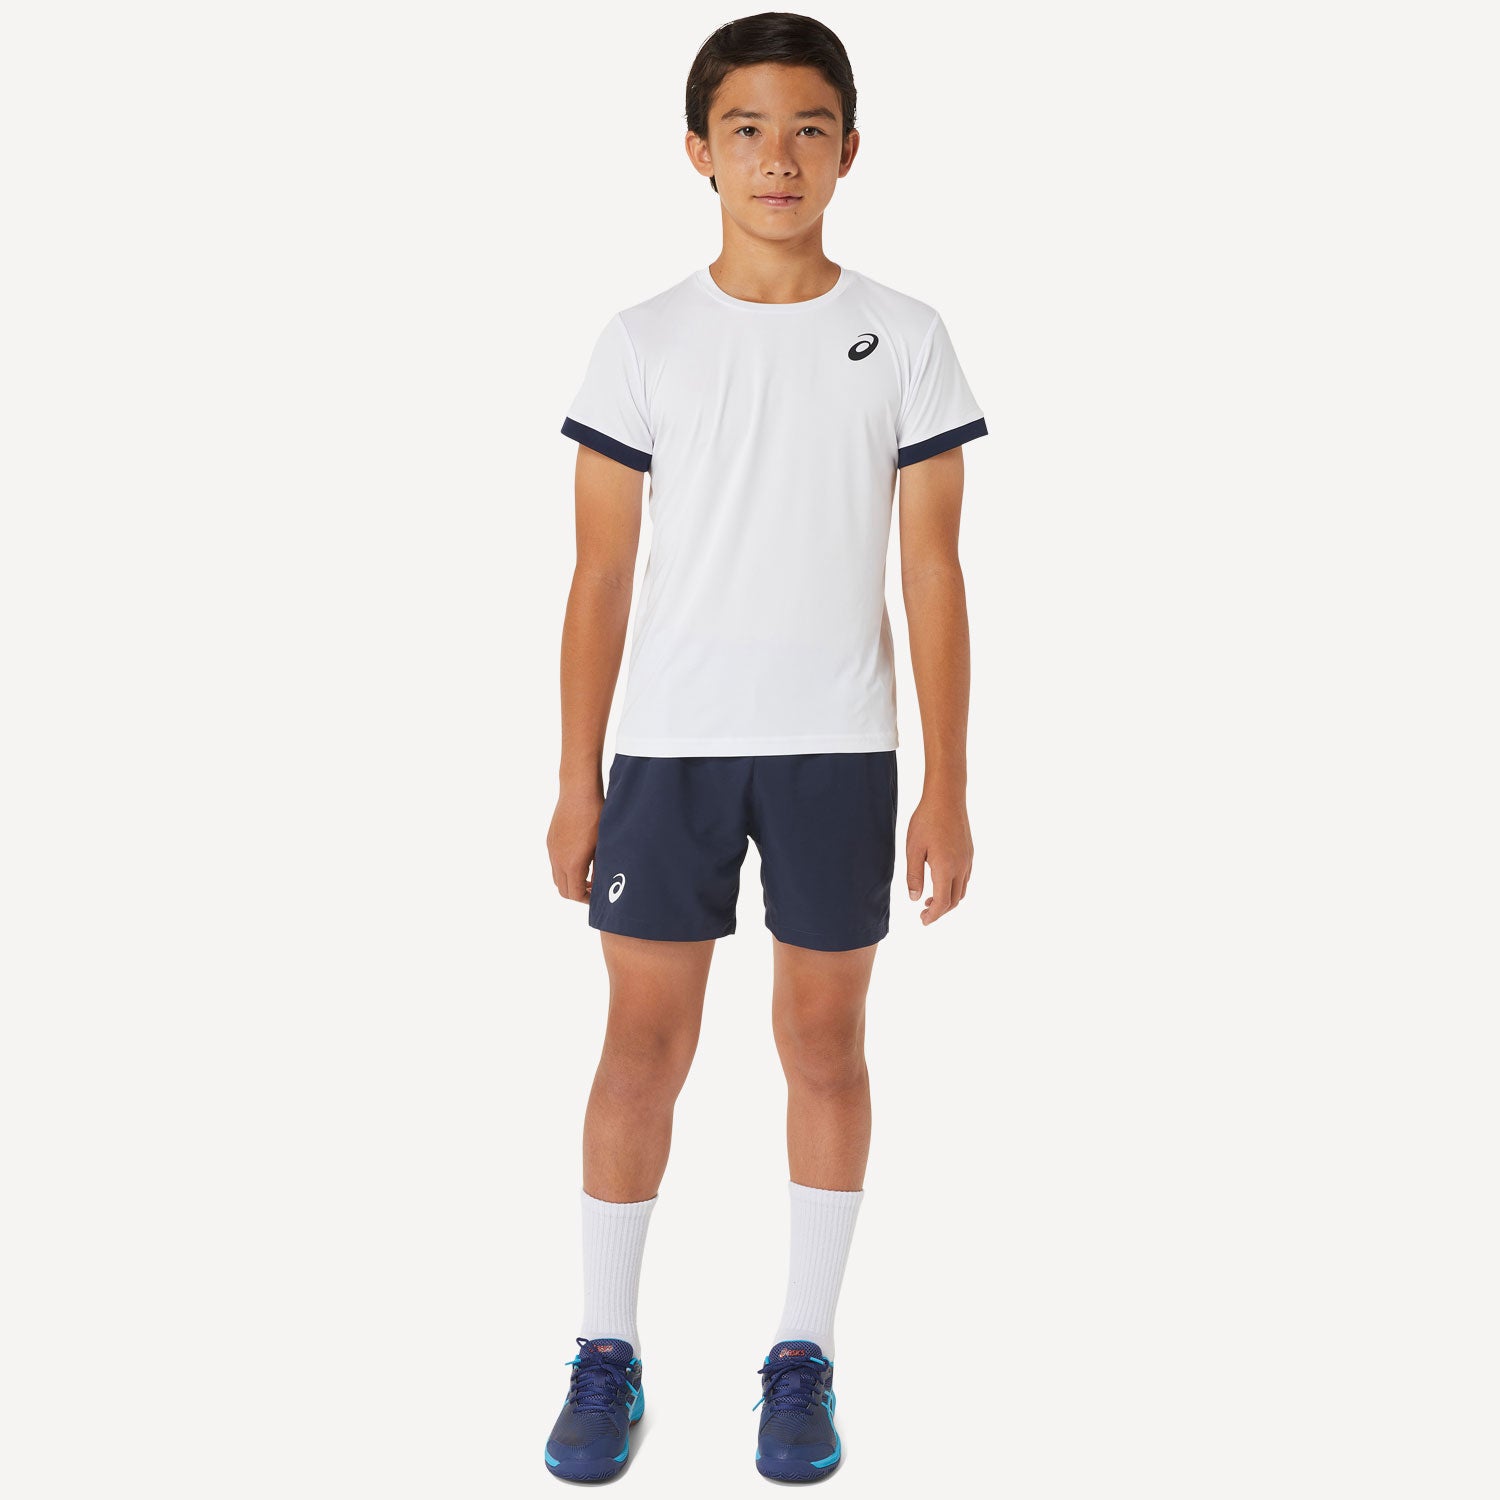 ASICS Boys' Tennis Shirt White (5)